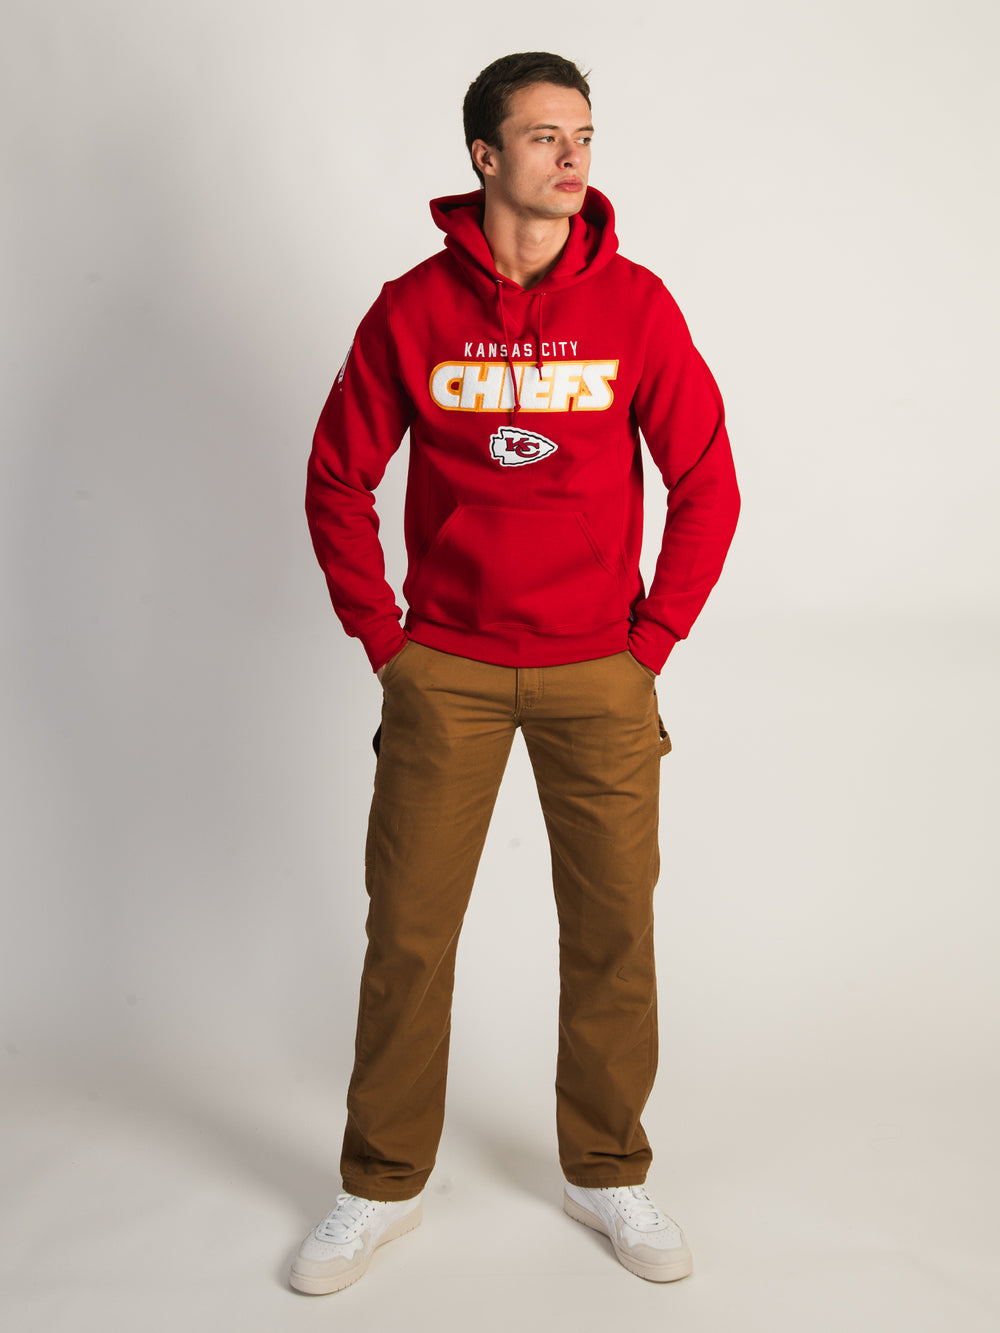 Chiefs Sweatshirt -  Canada